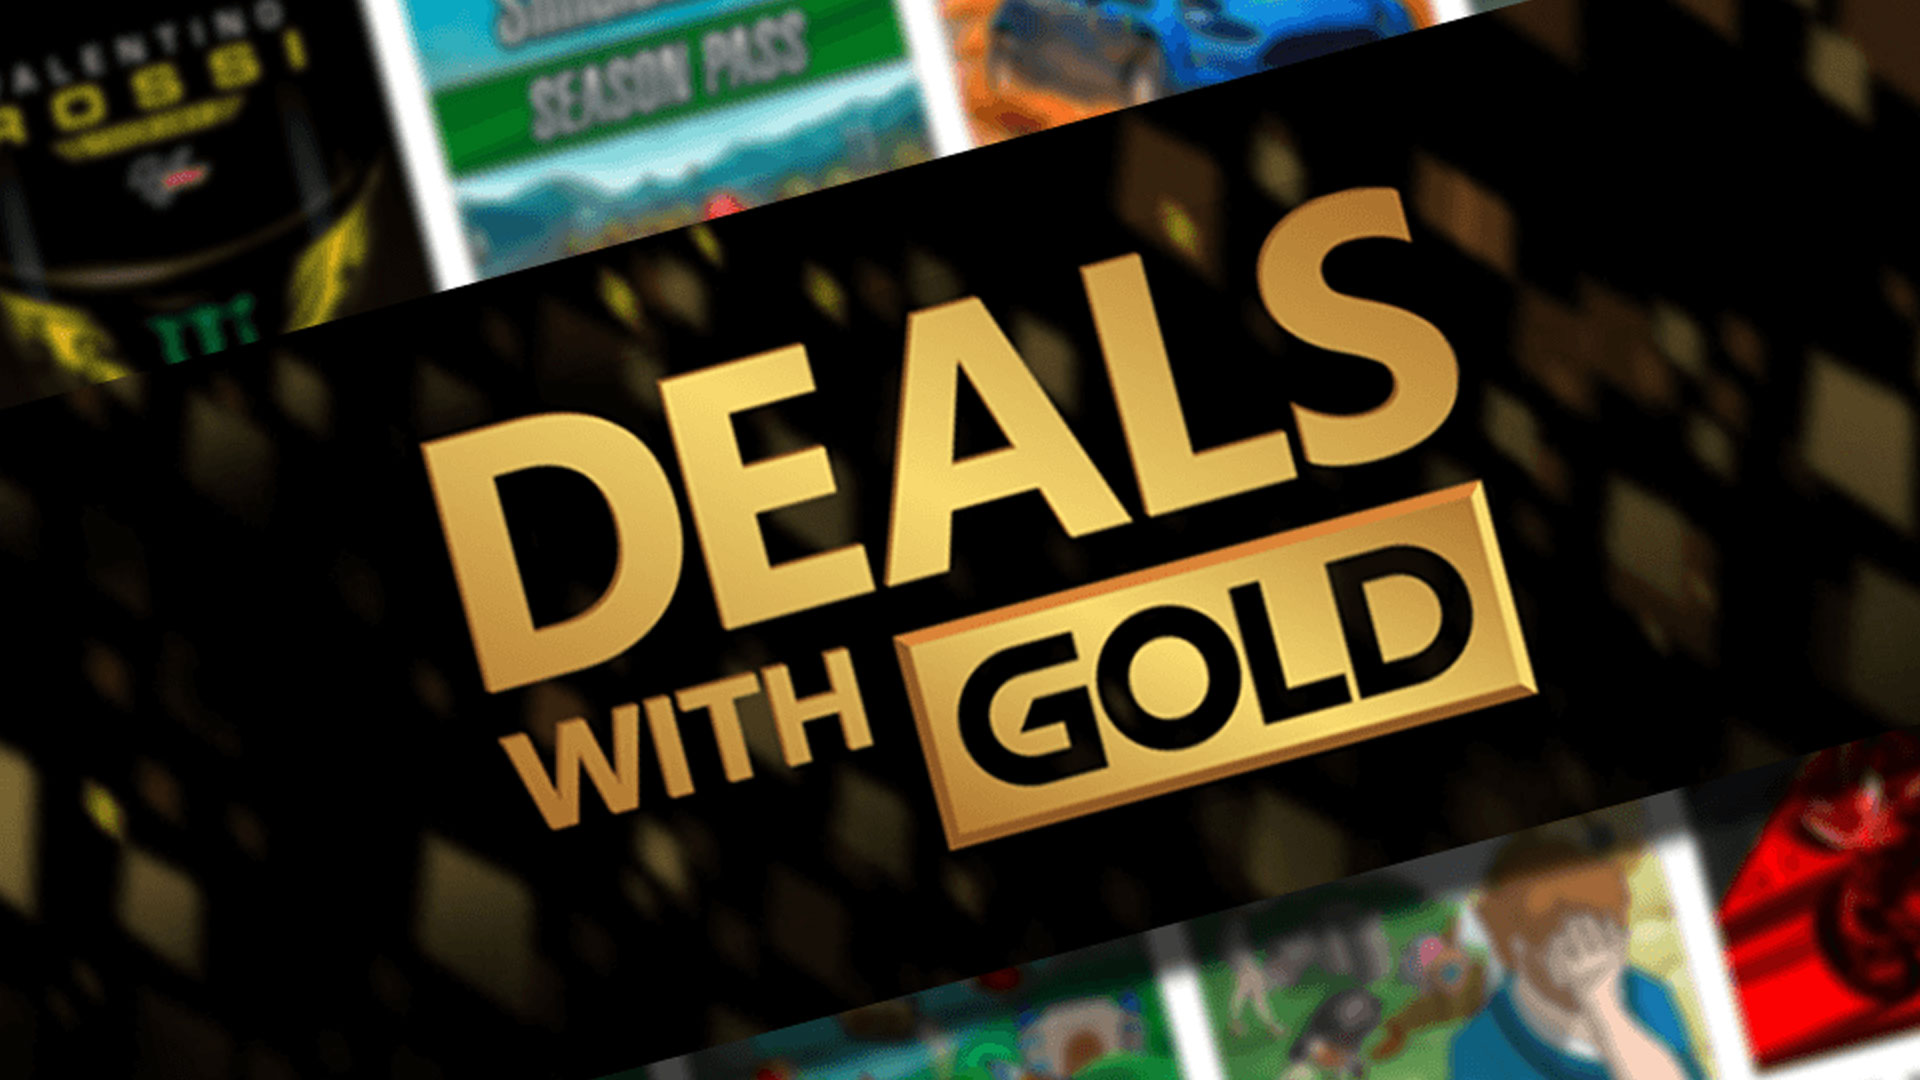 Deal com. Xbox deals with Gold. Deals with Gold. Еженедельная распродажа Live Gold.